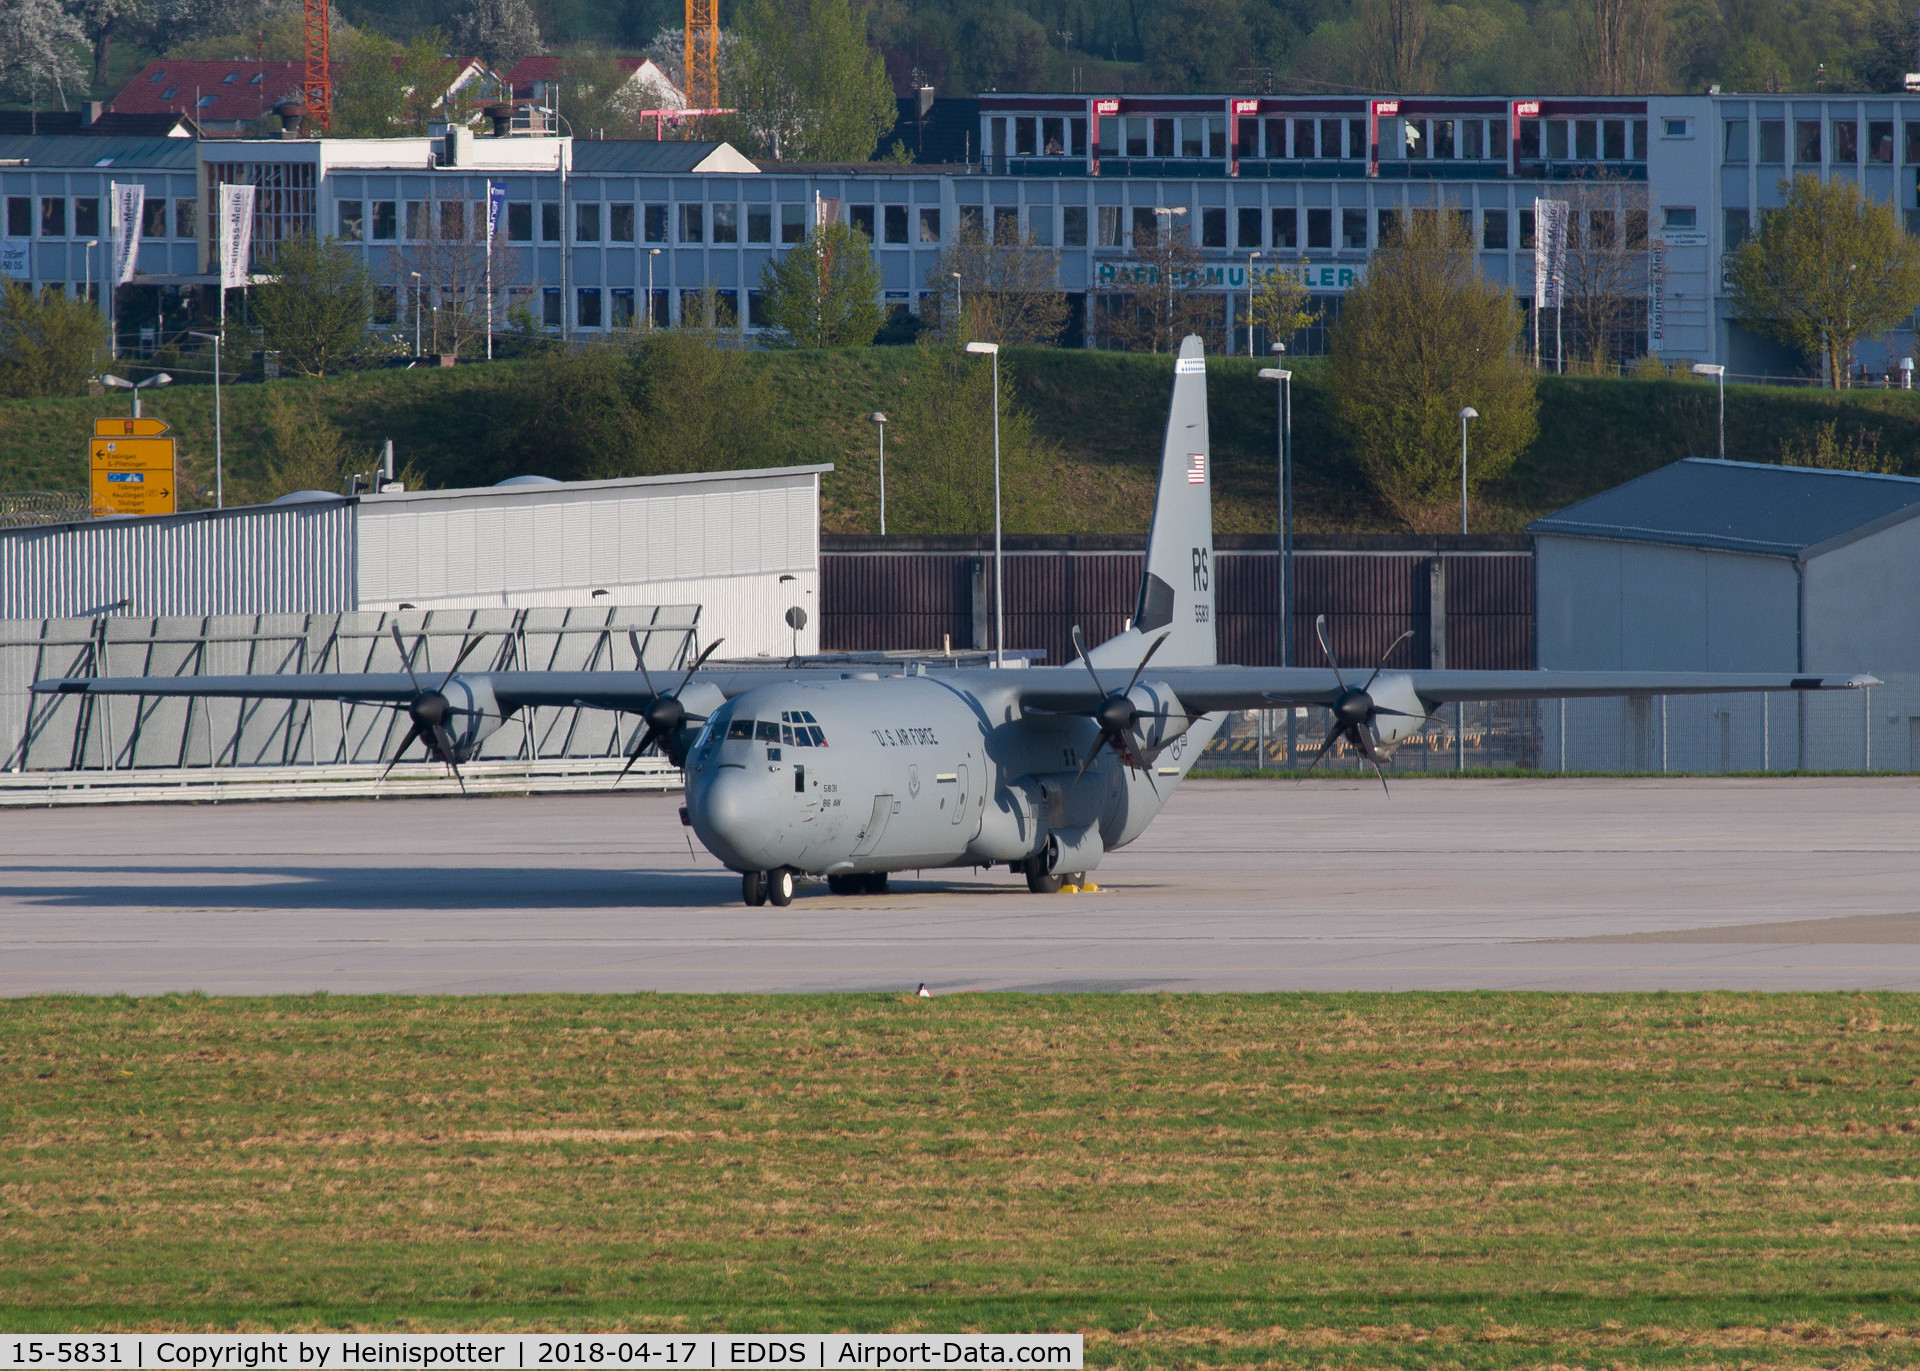 15-5831, 2017 Lockheed Martin C-130J-30 Hercules C/N 382-5831, 15-5831 at Stuttgart Airport.